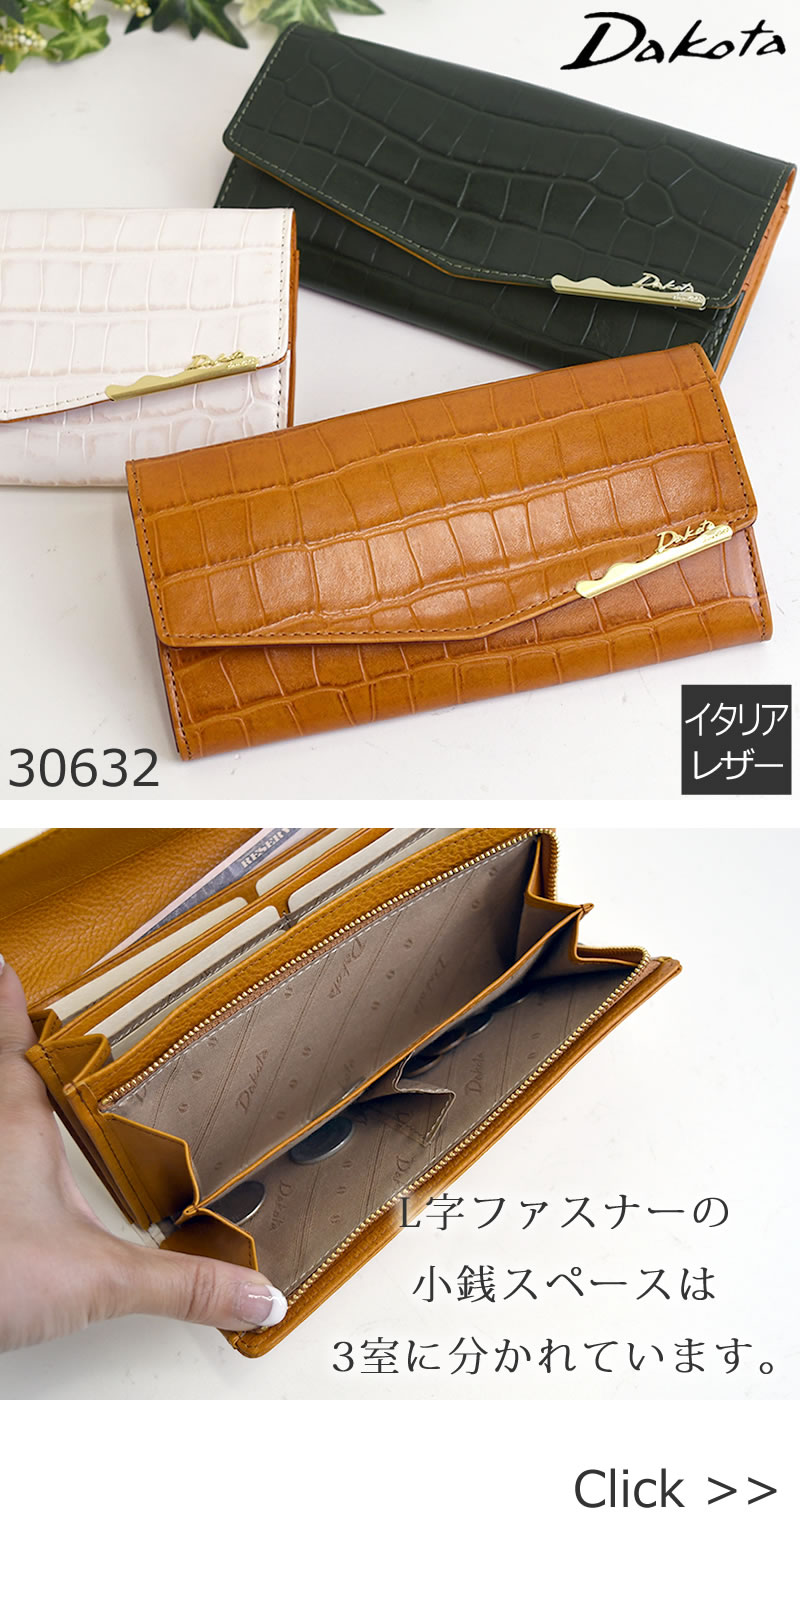 Dakotaイタリアンレザークロコダイル柄の型押しかぶせ長財布